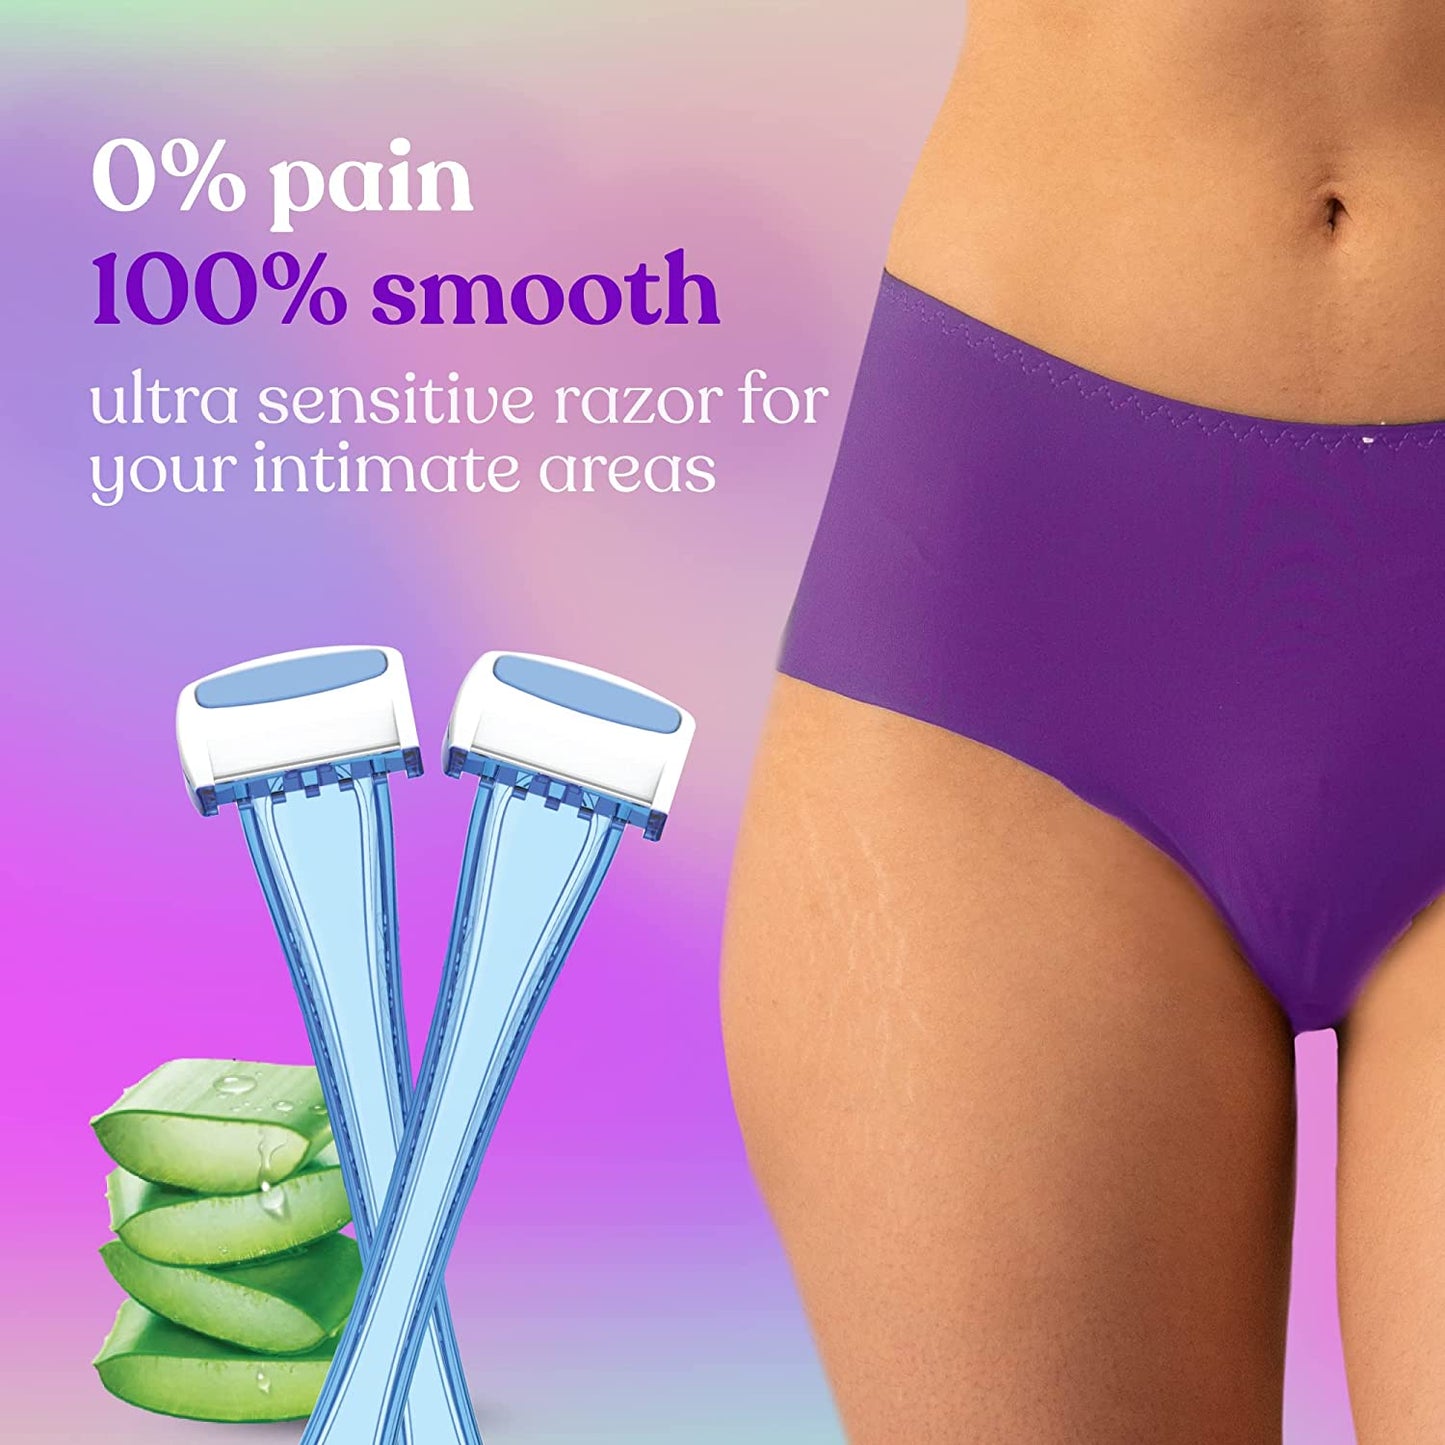 Bombae Irritation-free Bikini Razor for Women with Aloe Vera and Vitamin E (Pack of 2)